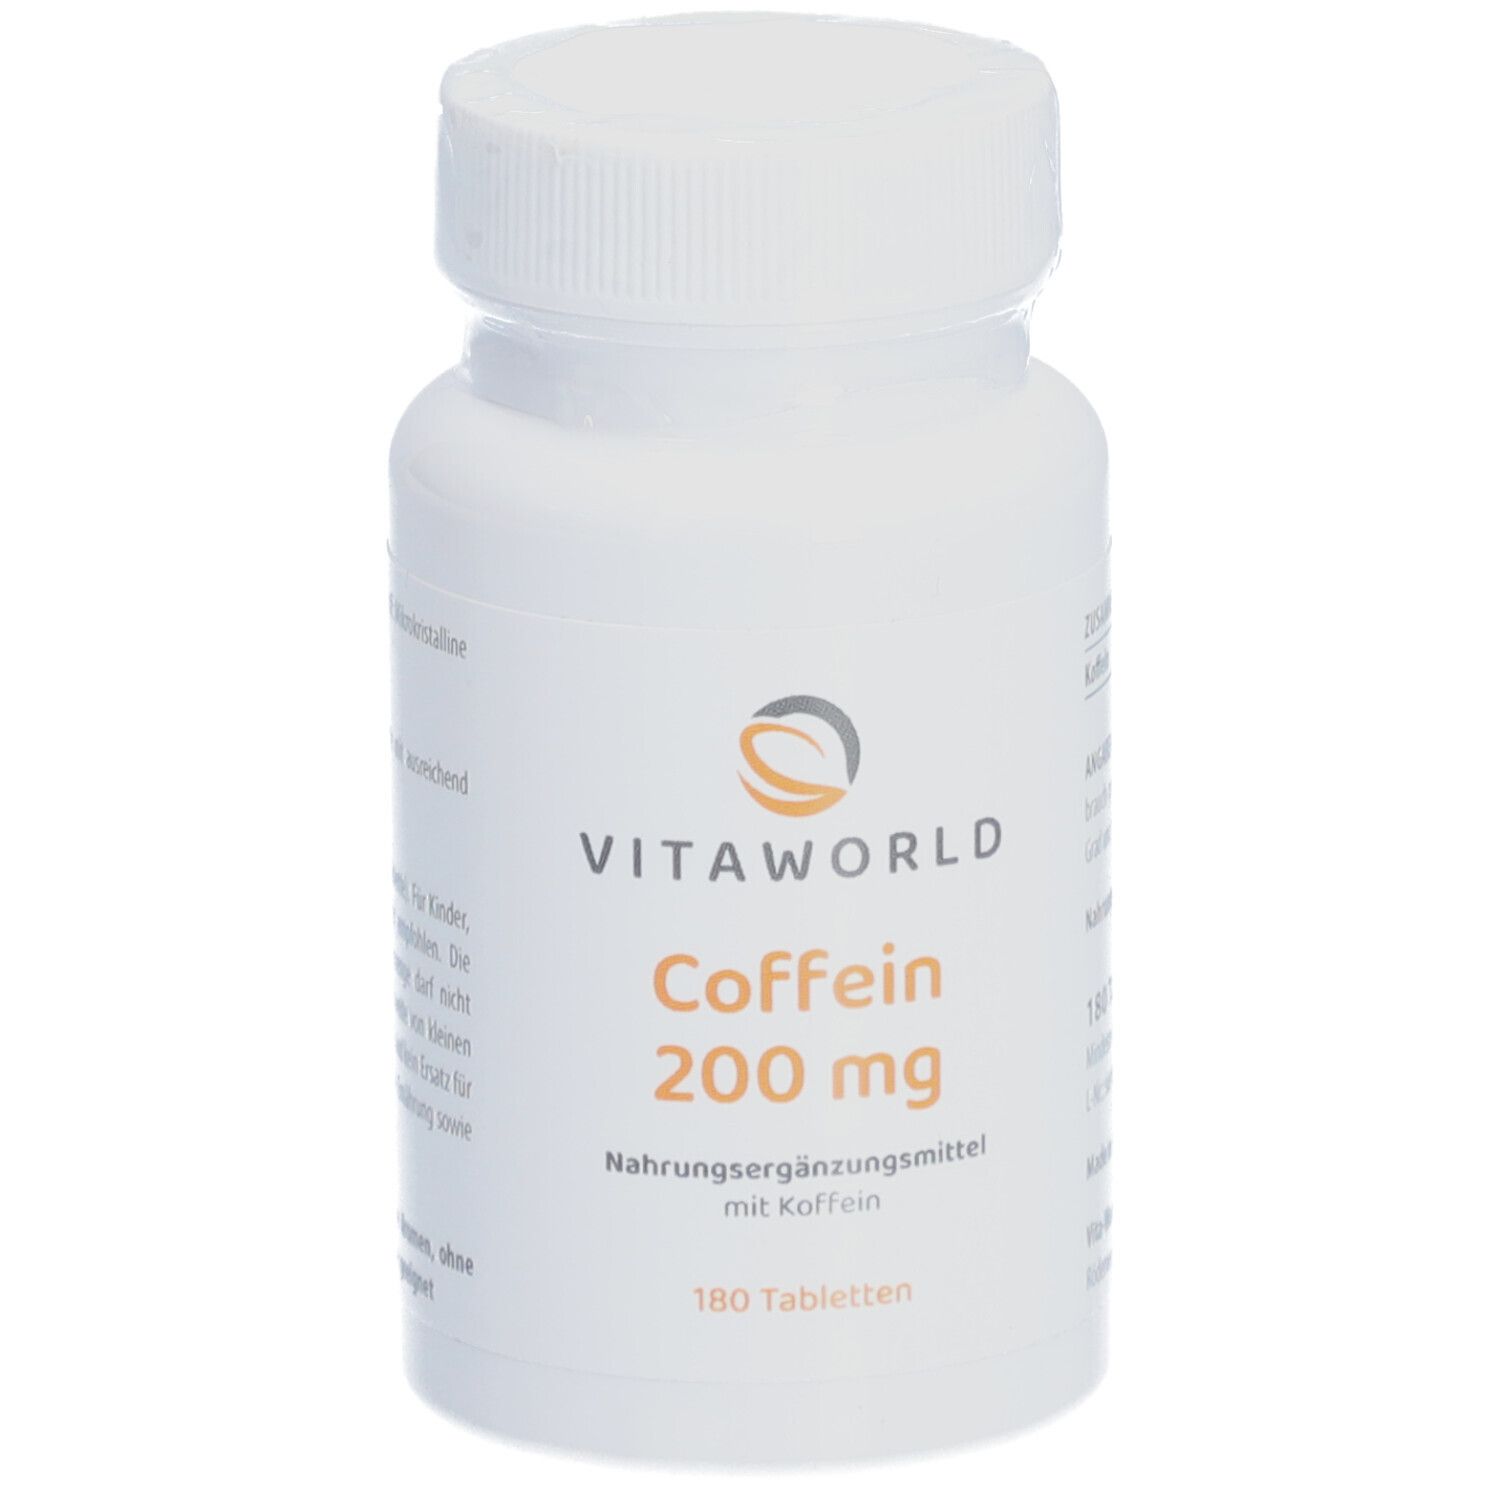 VitaWorld Coffein 200 mg